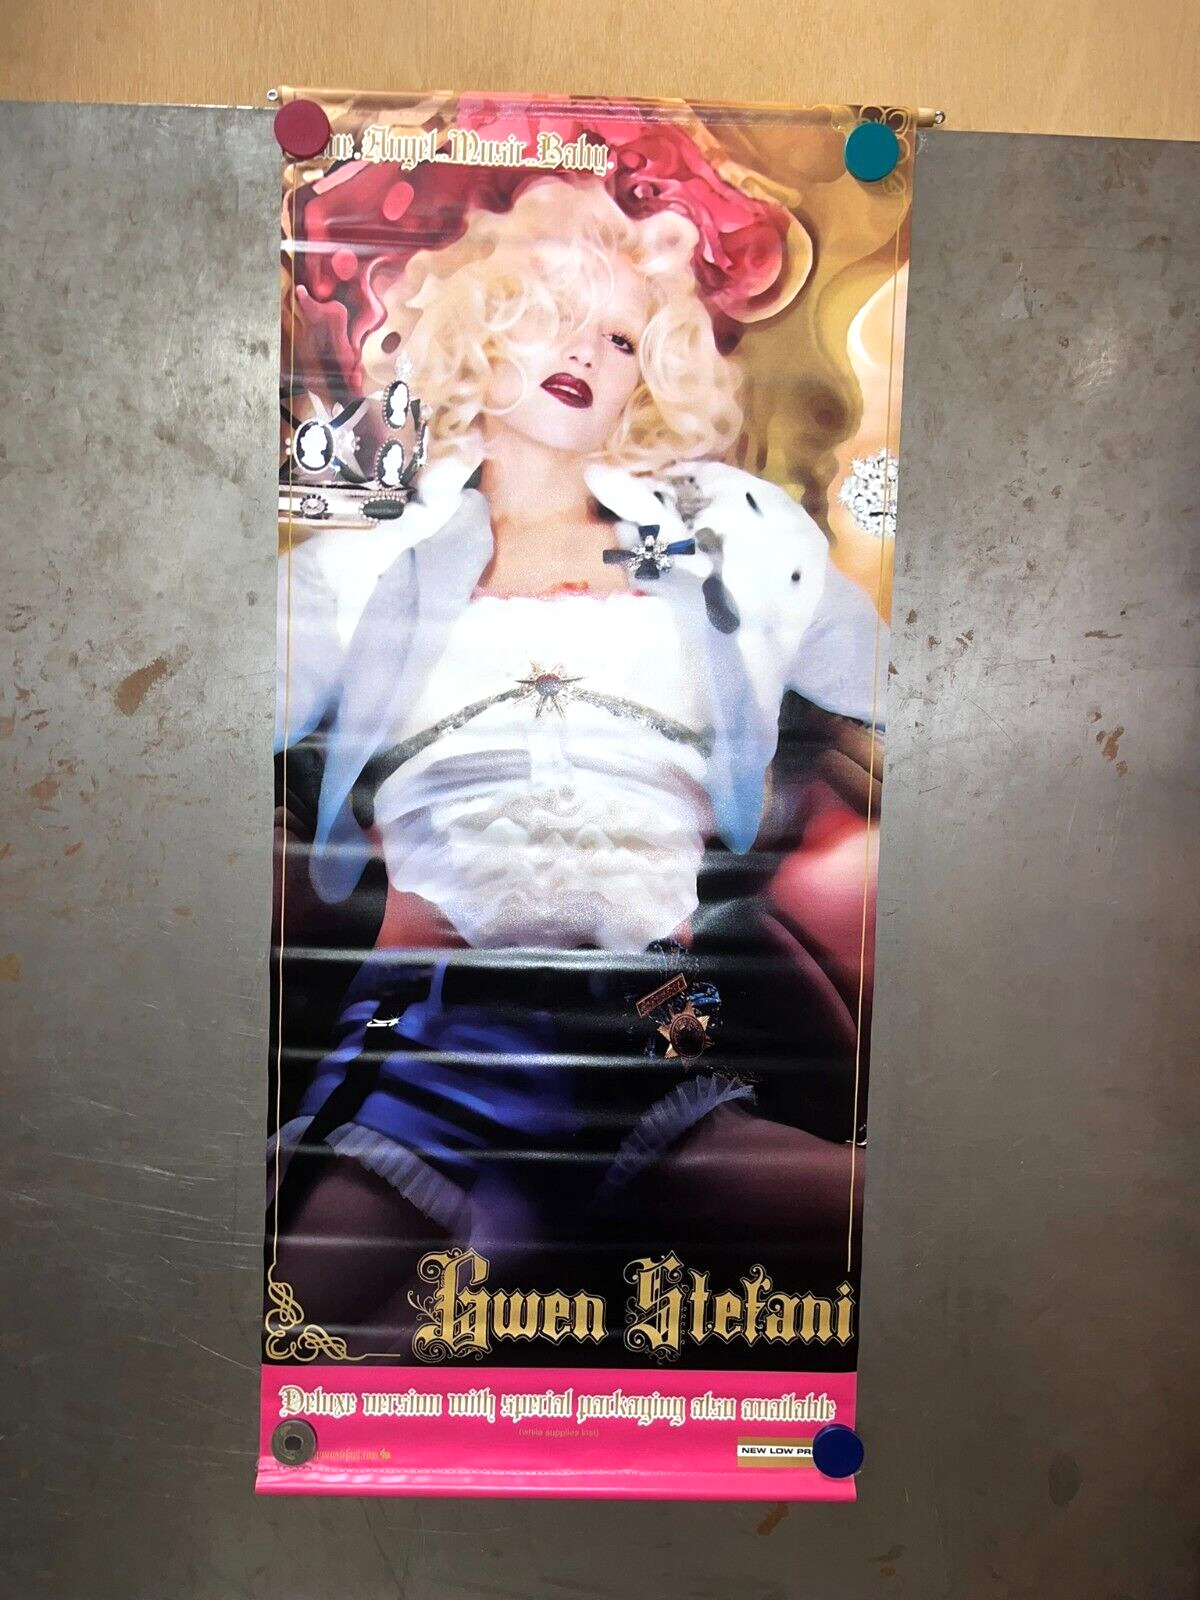 Gwen Stefani Love.angel.music.baby 2-sided Vinyl Promo Banner 2004 Interscope